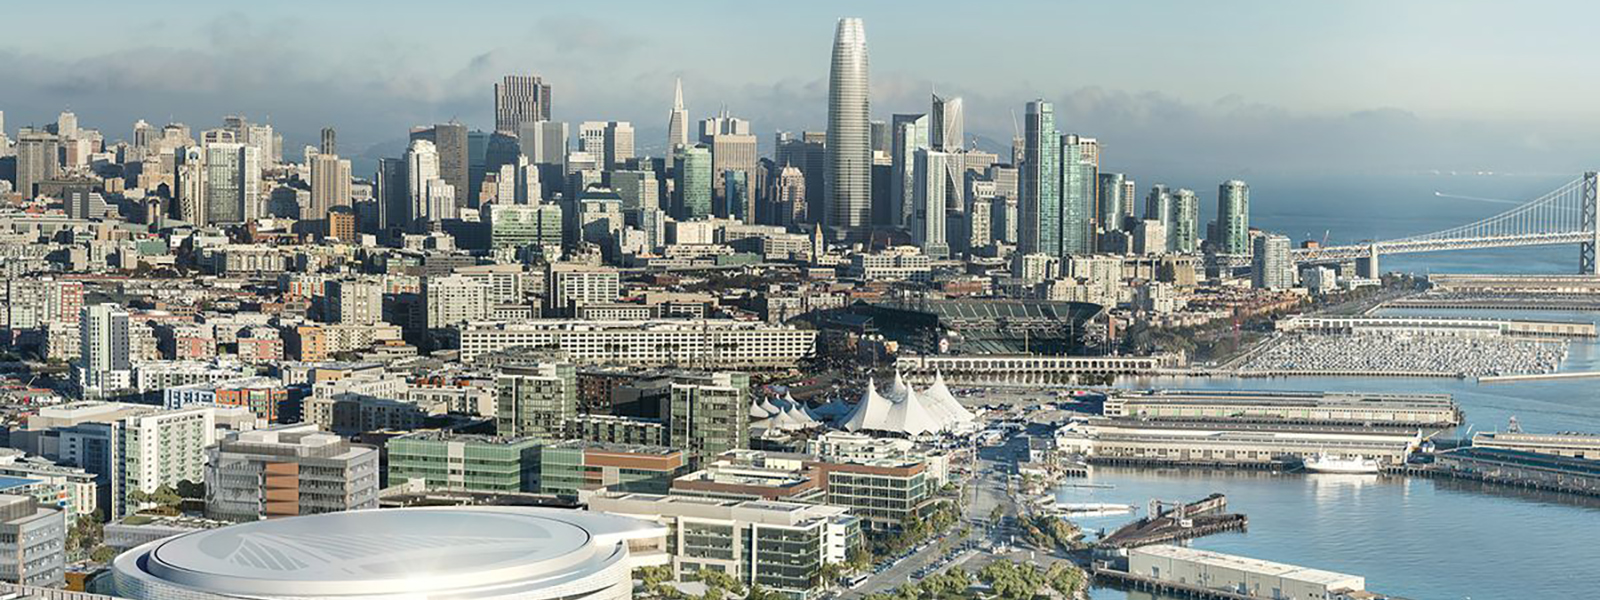 Innovative Chase Center Taking Shape in San Francisco 